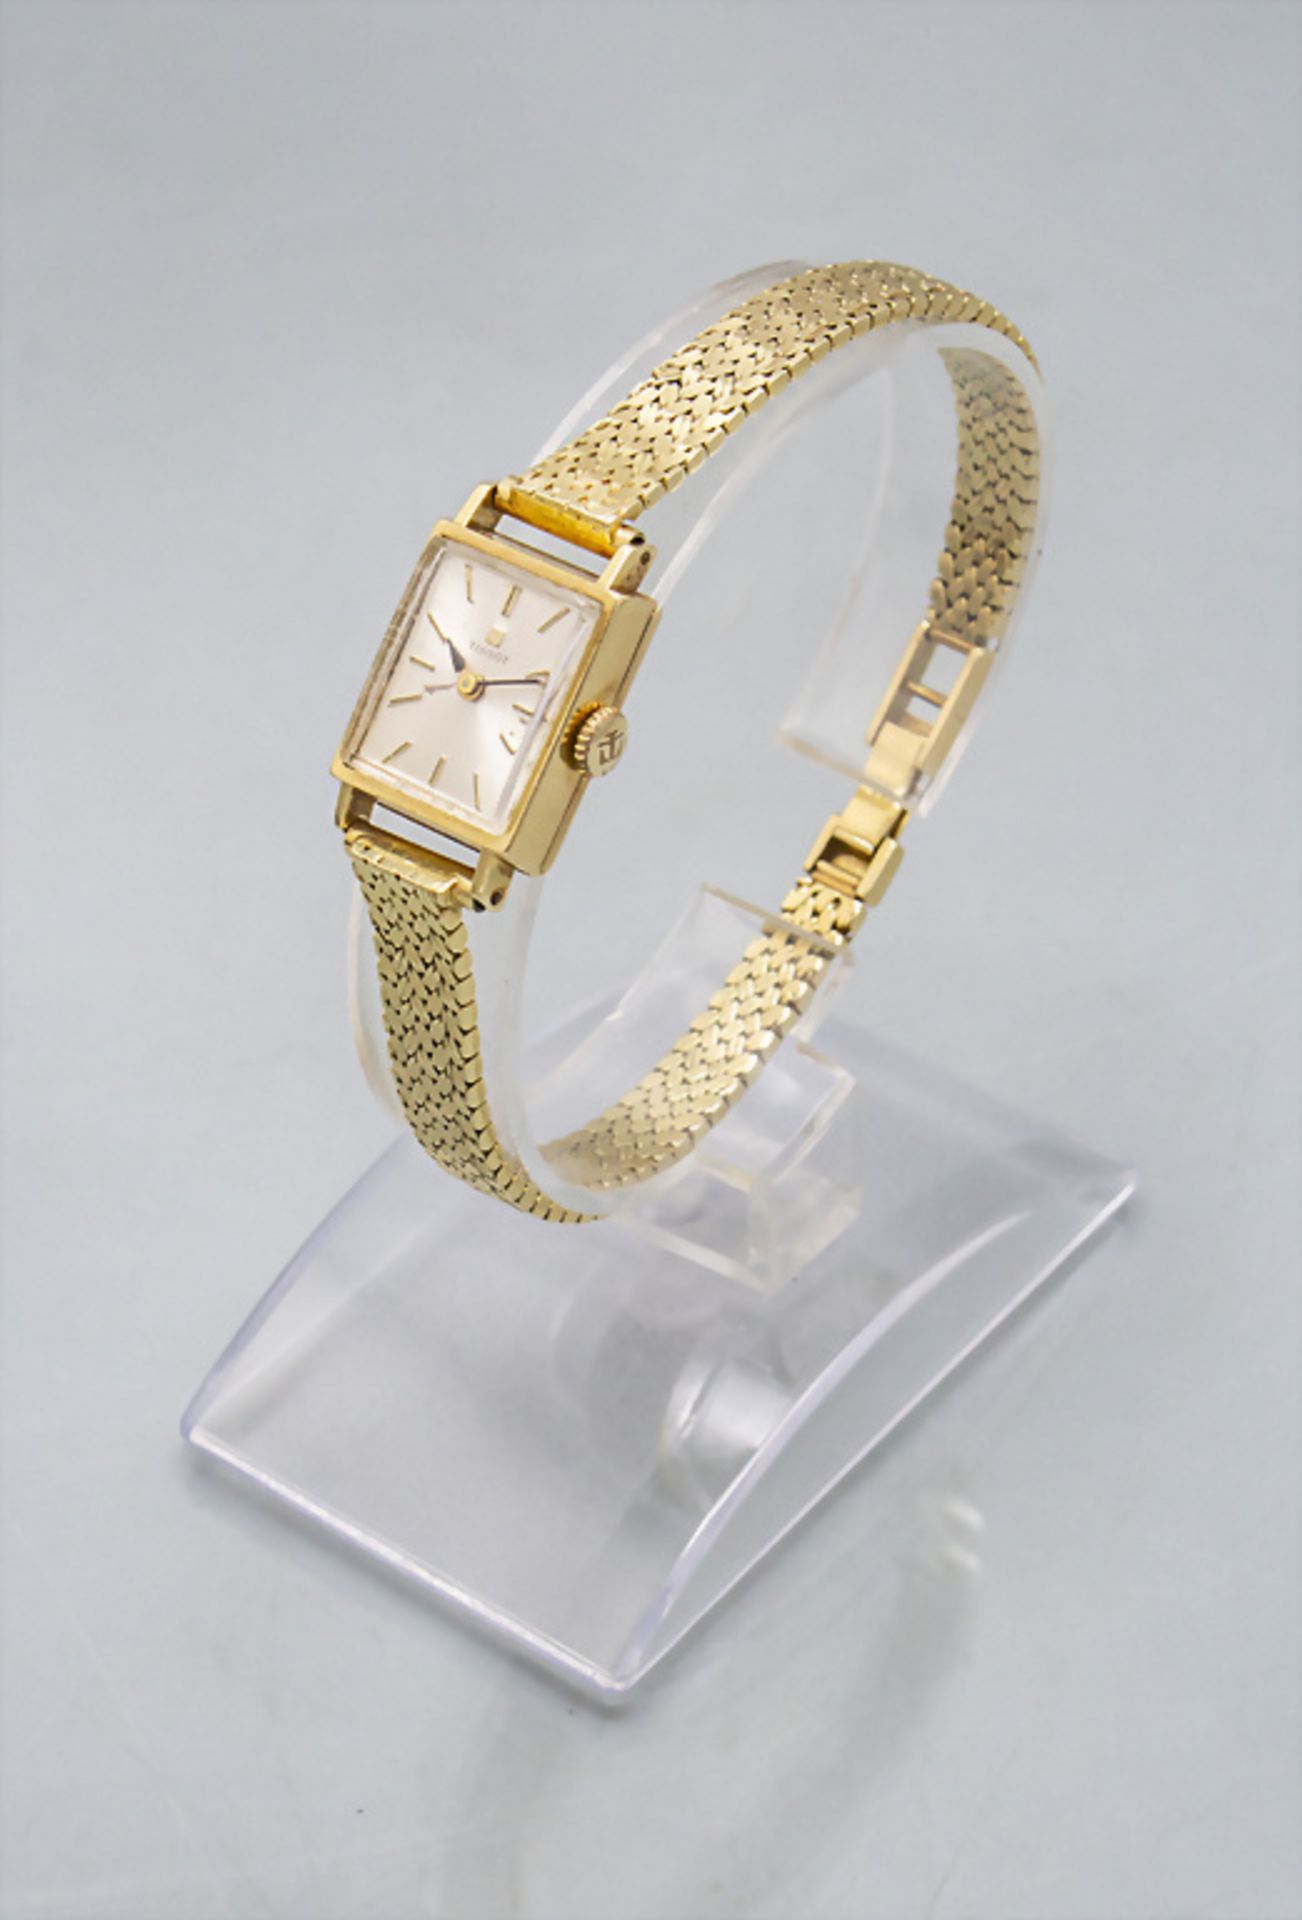 Damenarmbanduhr / An 14 ct gold ladies wristwatch, Tissot, Schweiz / Swiss - Image 2 of 7